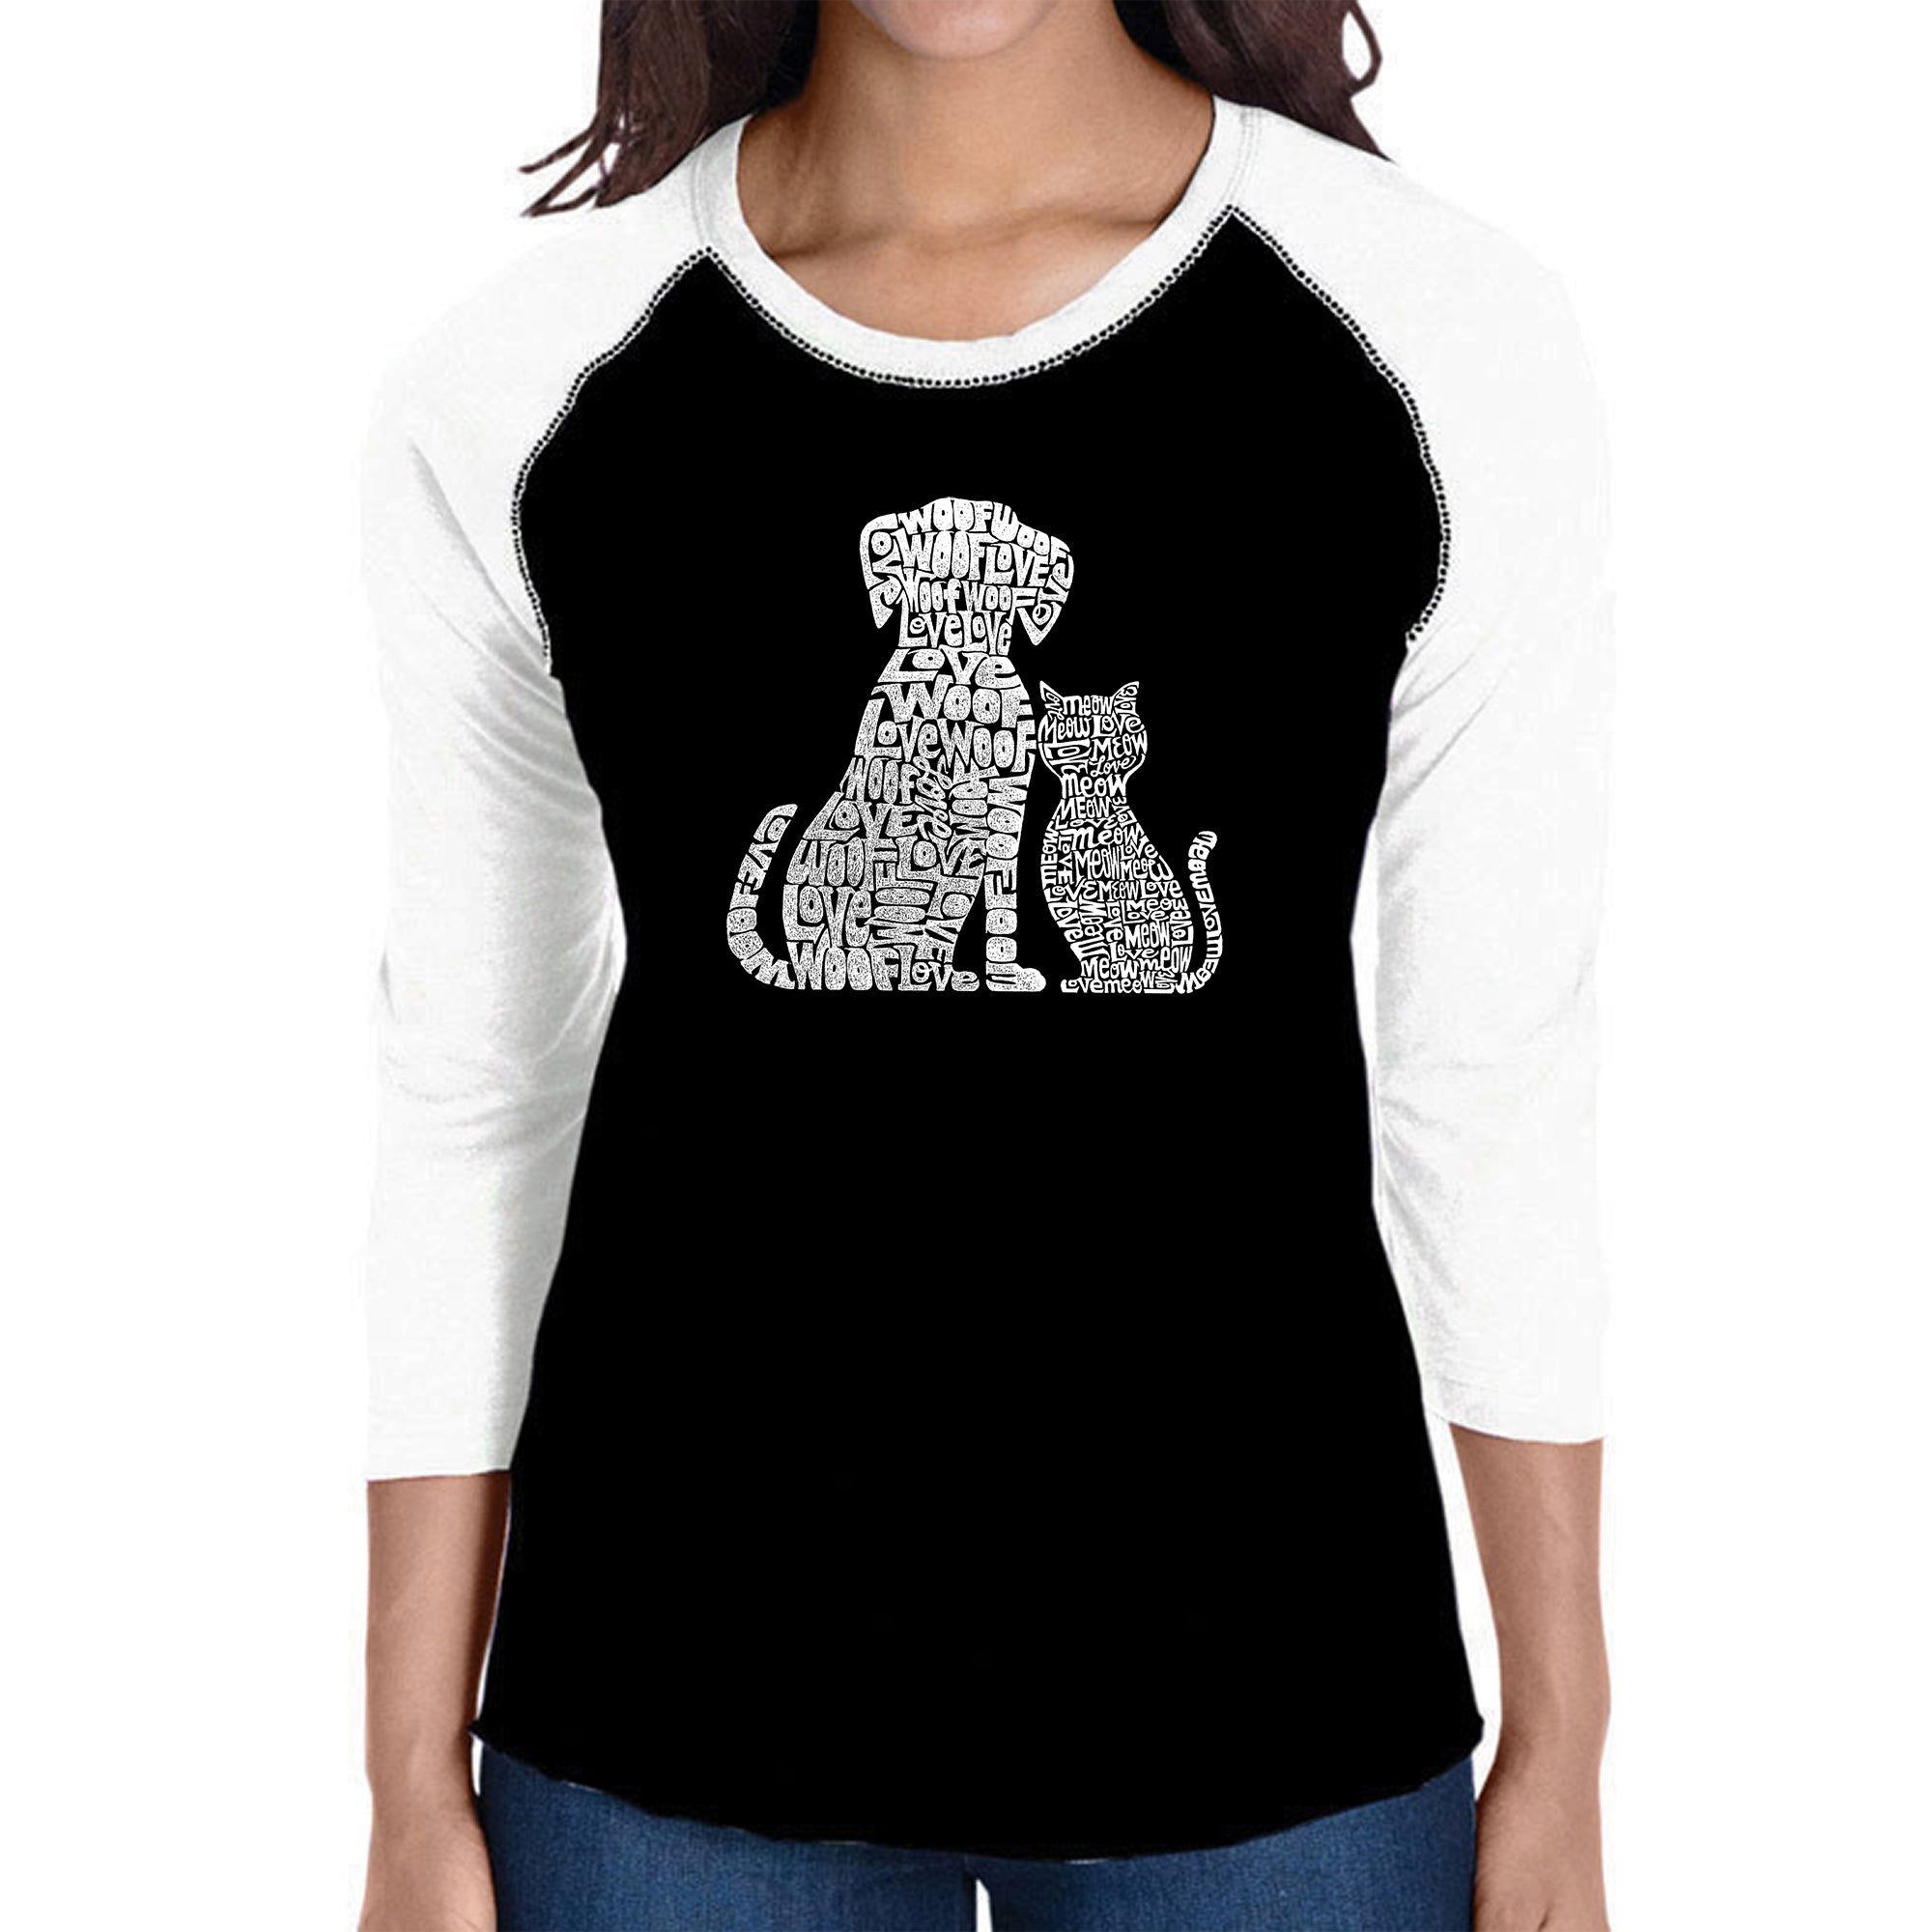 Dogs And Cats - Women's Raglan Baseball Word Art T-Shirt - Black/White - XX-Large